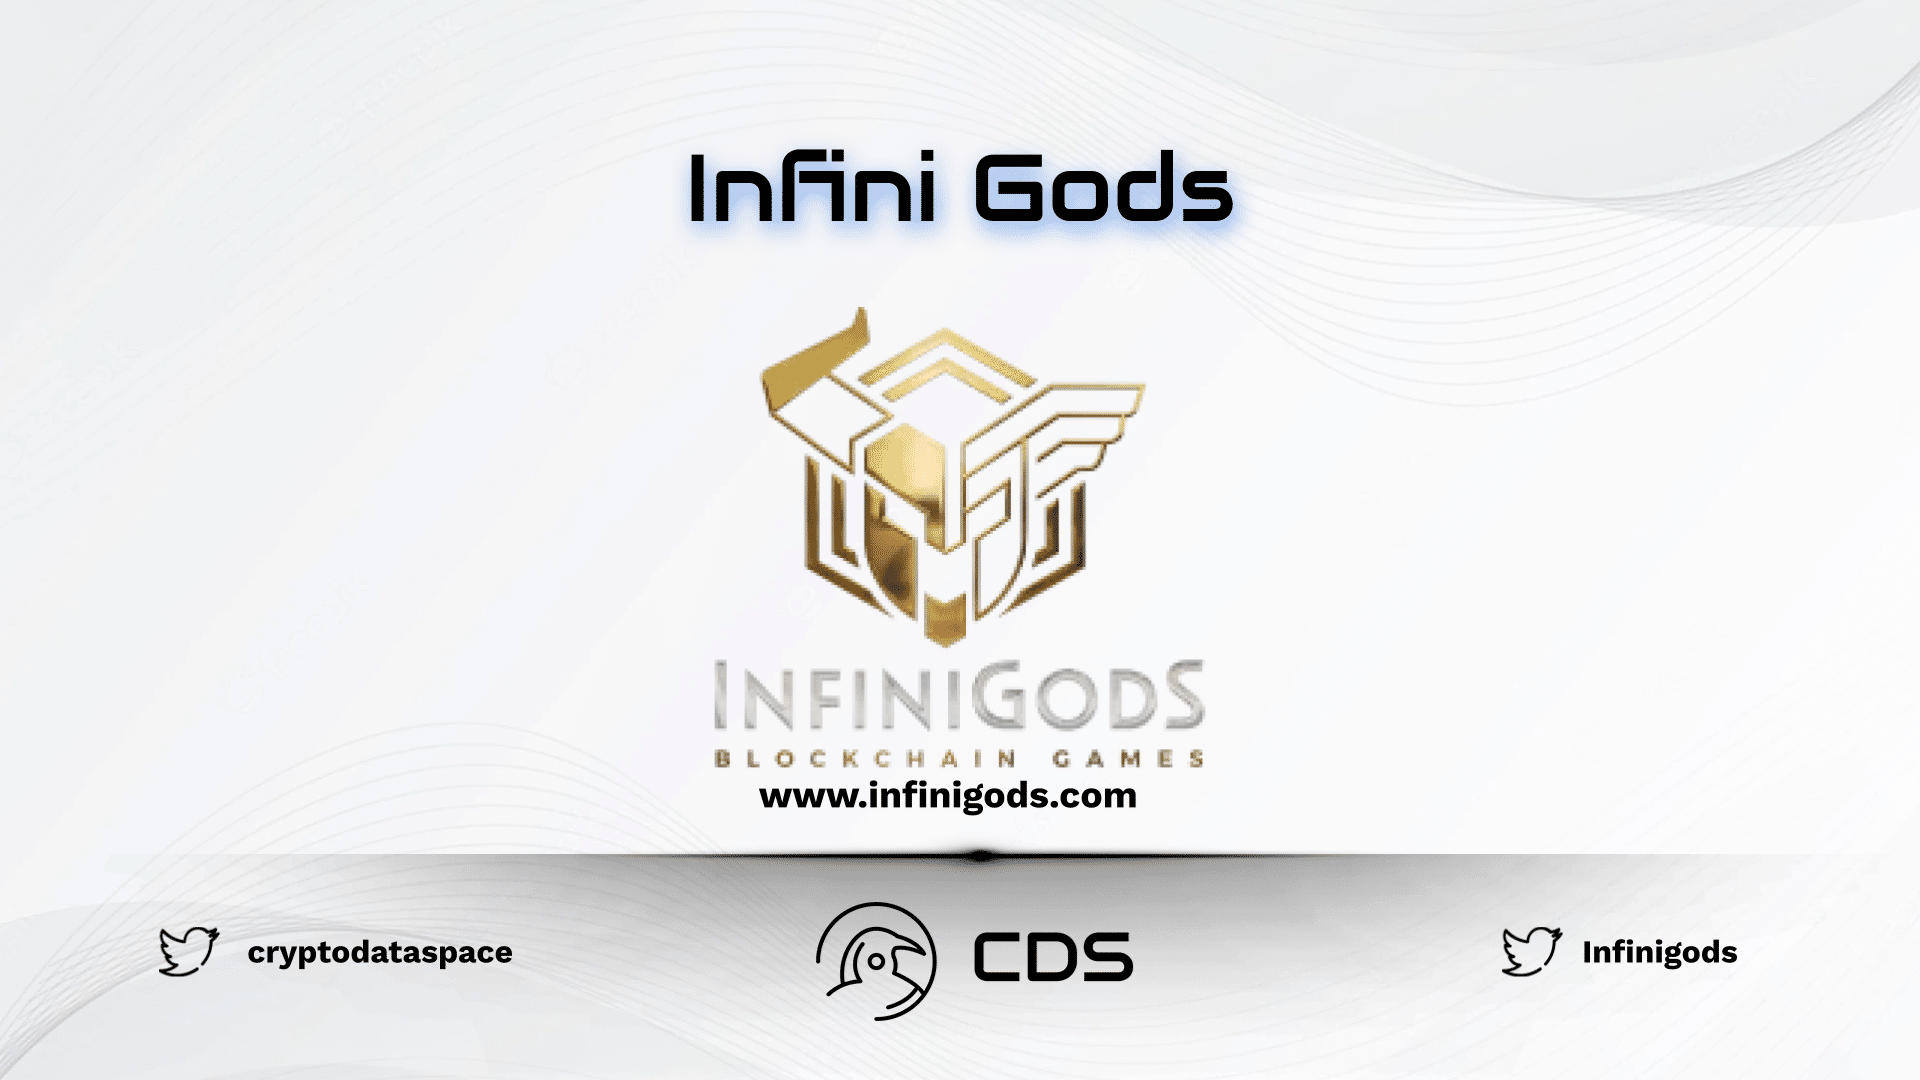 Infini Gods